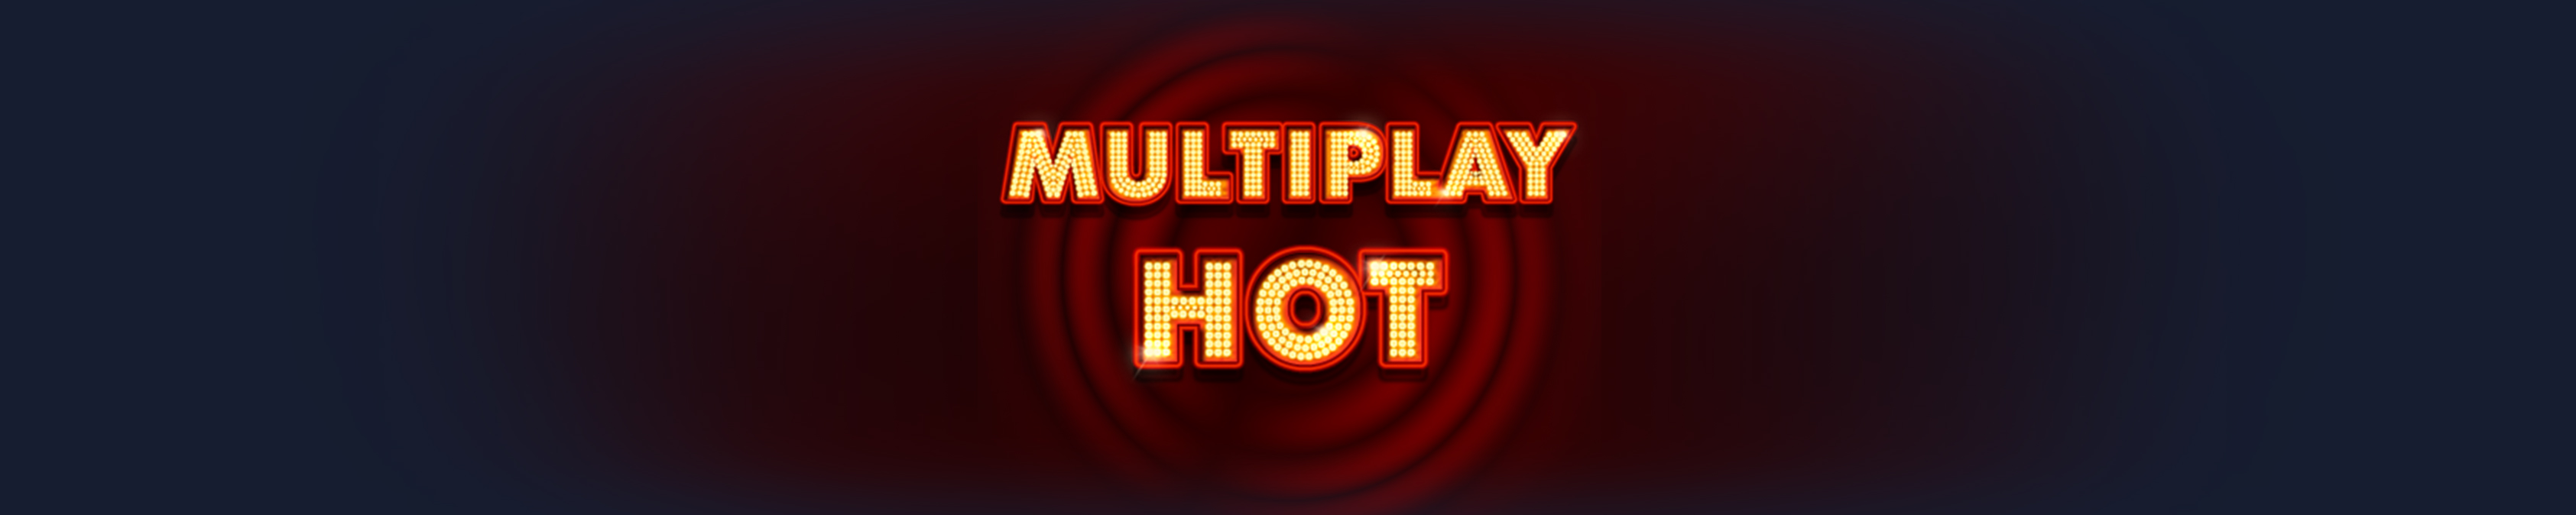 Multiplay Hot e-gaming